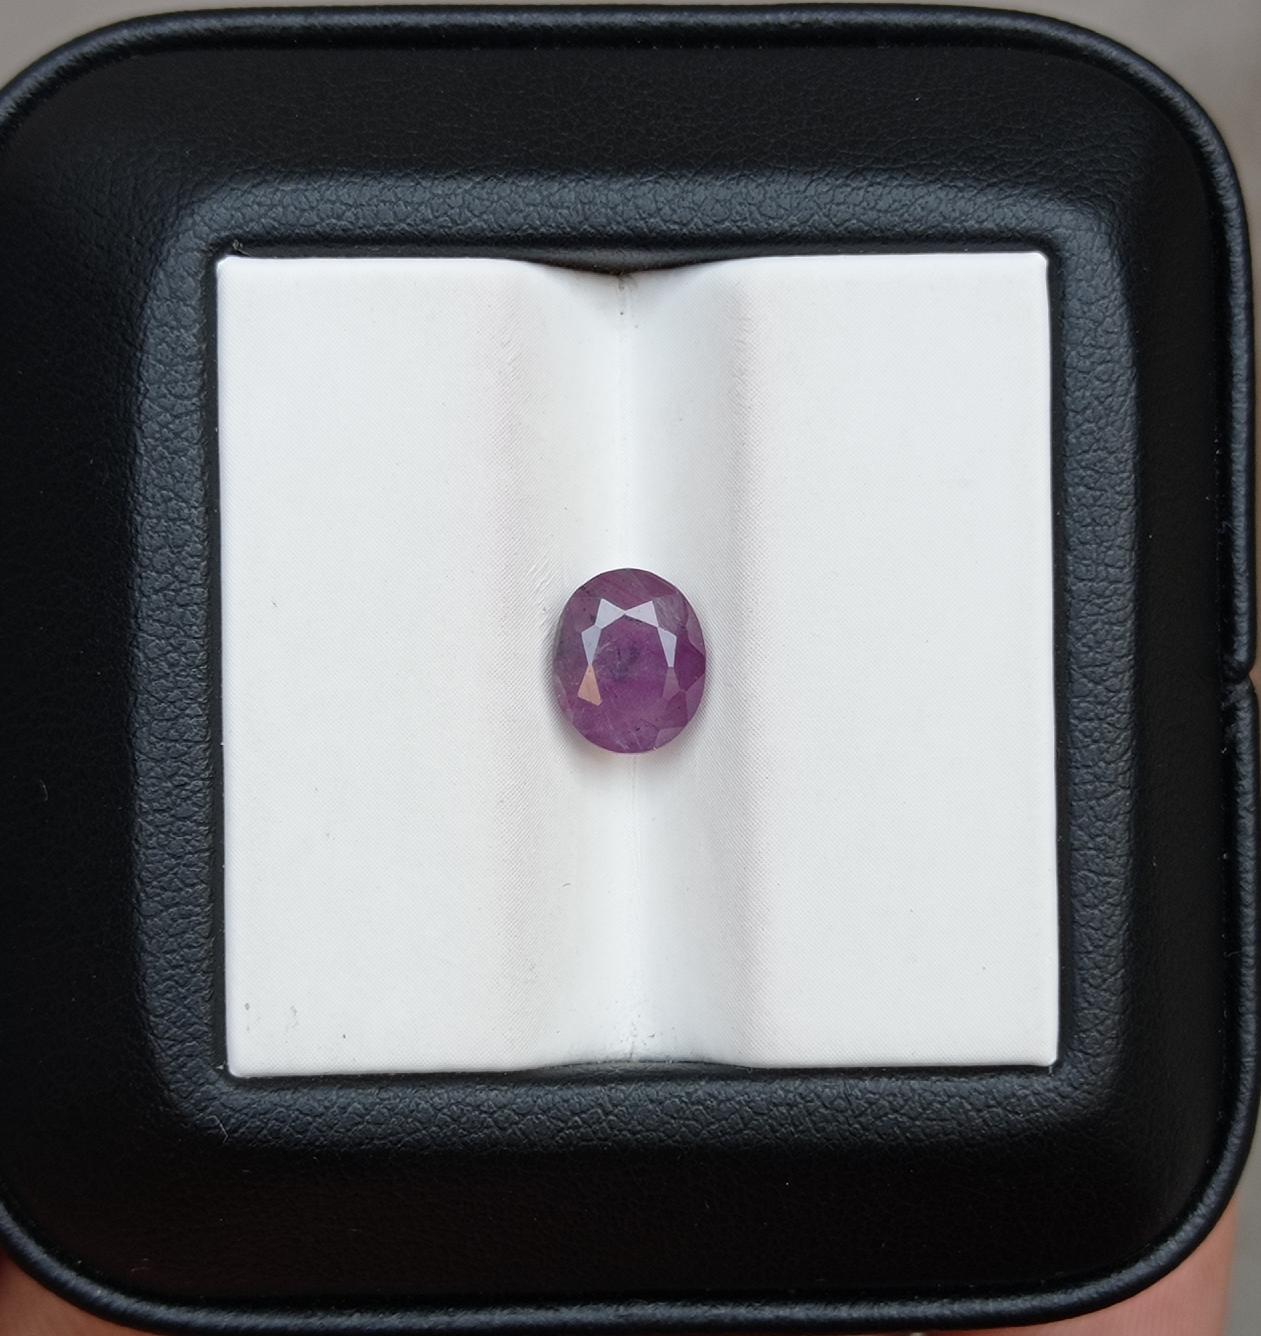 1.95ct Sapphire for Sale - Natural untreated Kashmiri Sapphire - Dimensions 8x6.5x4.5mm